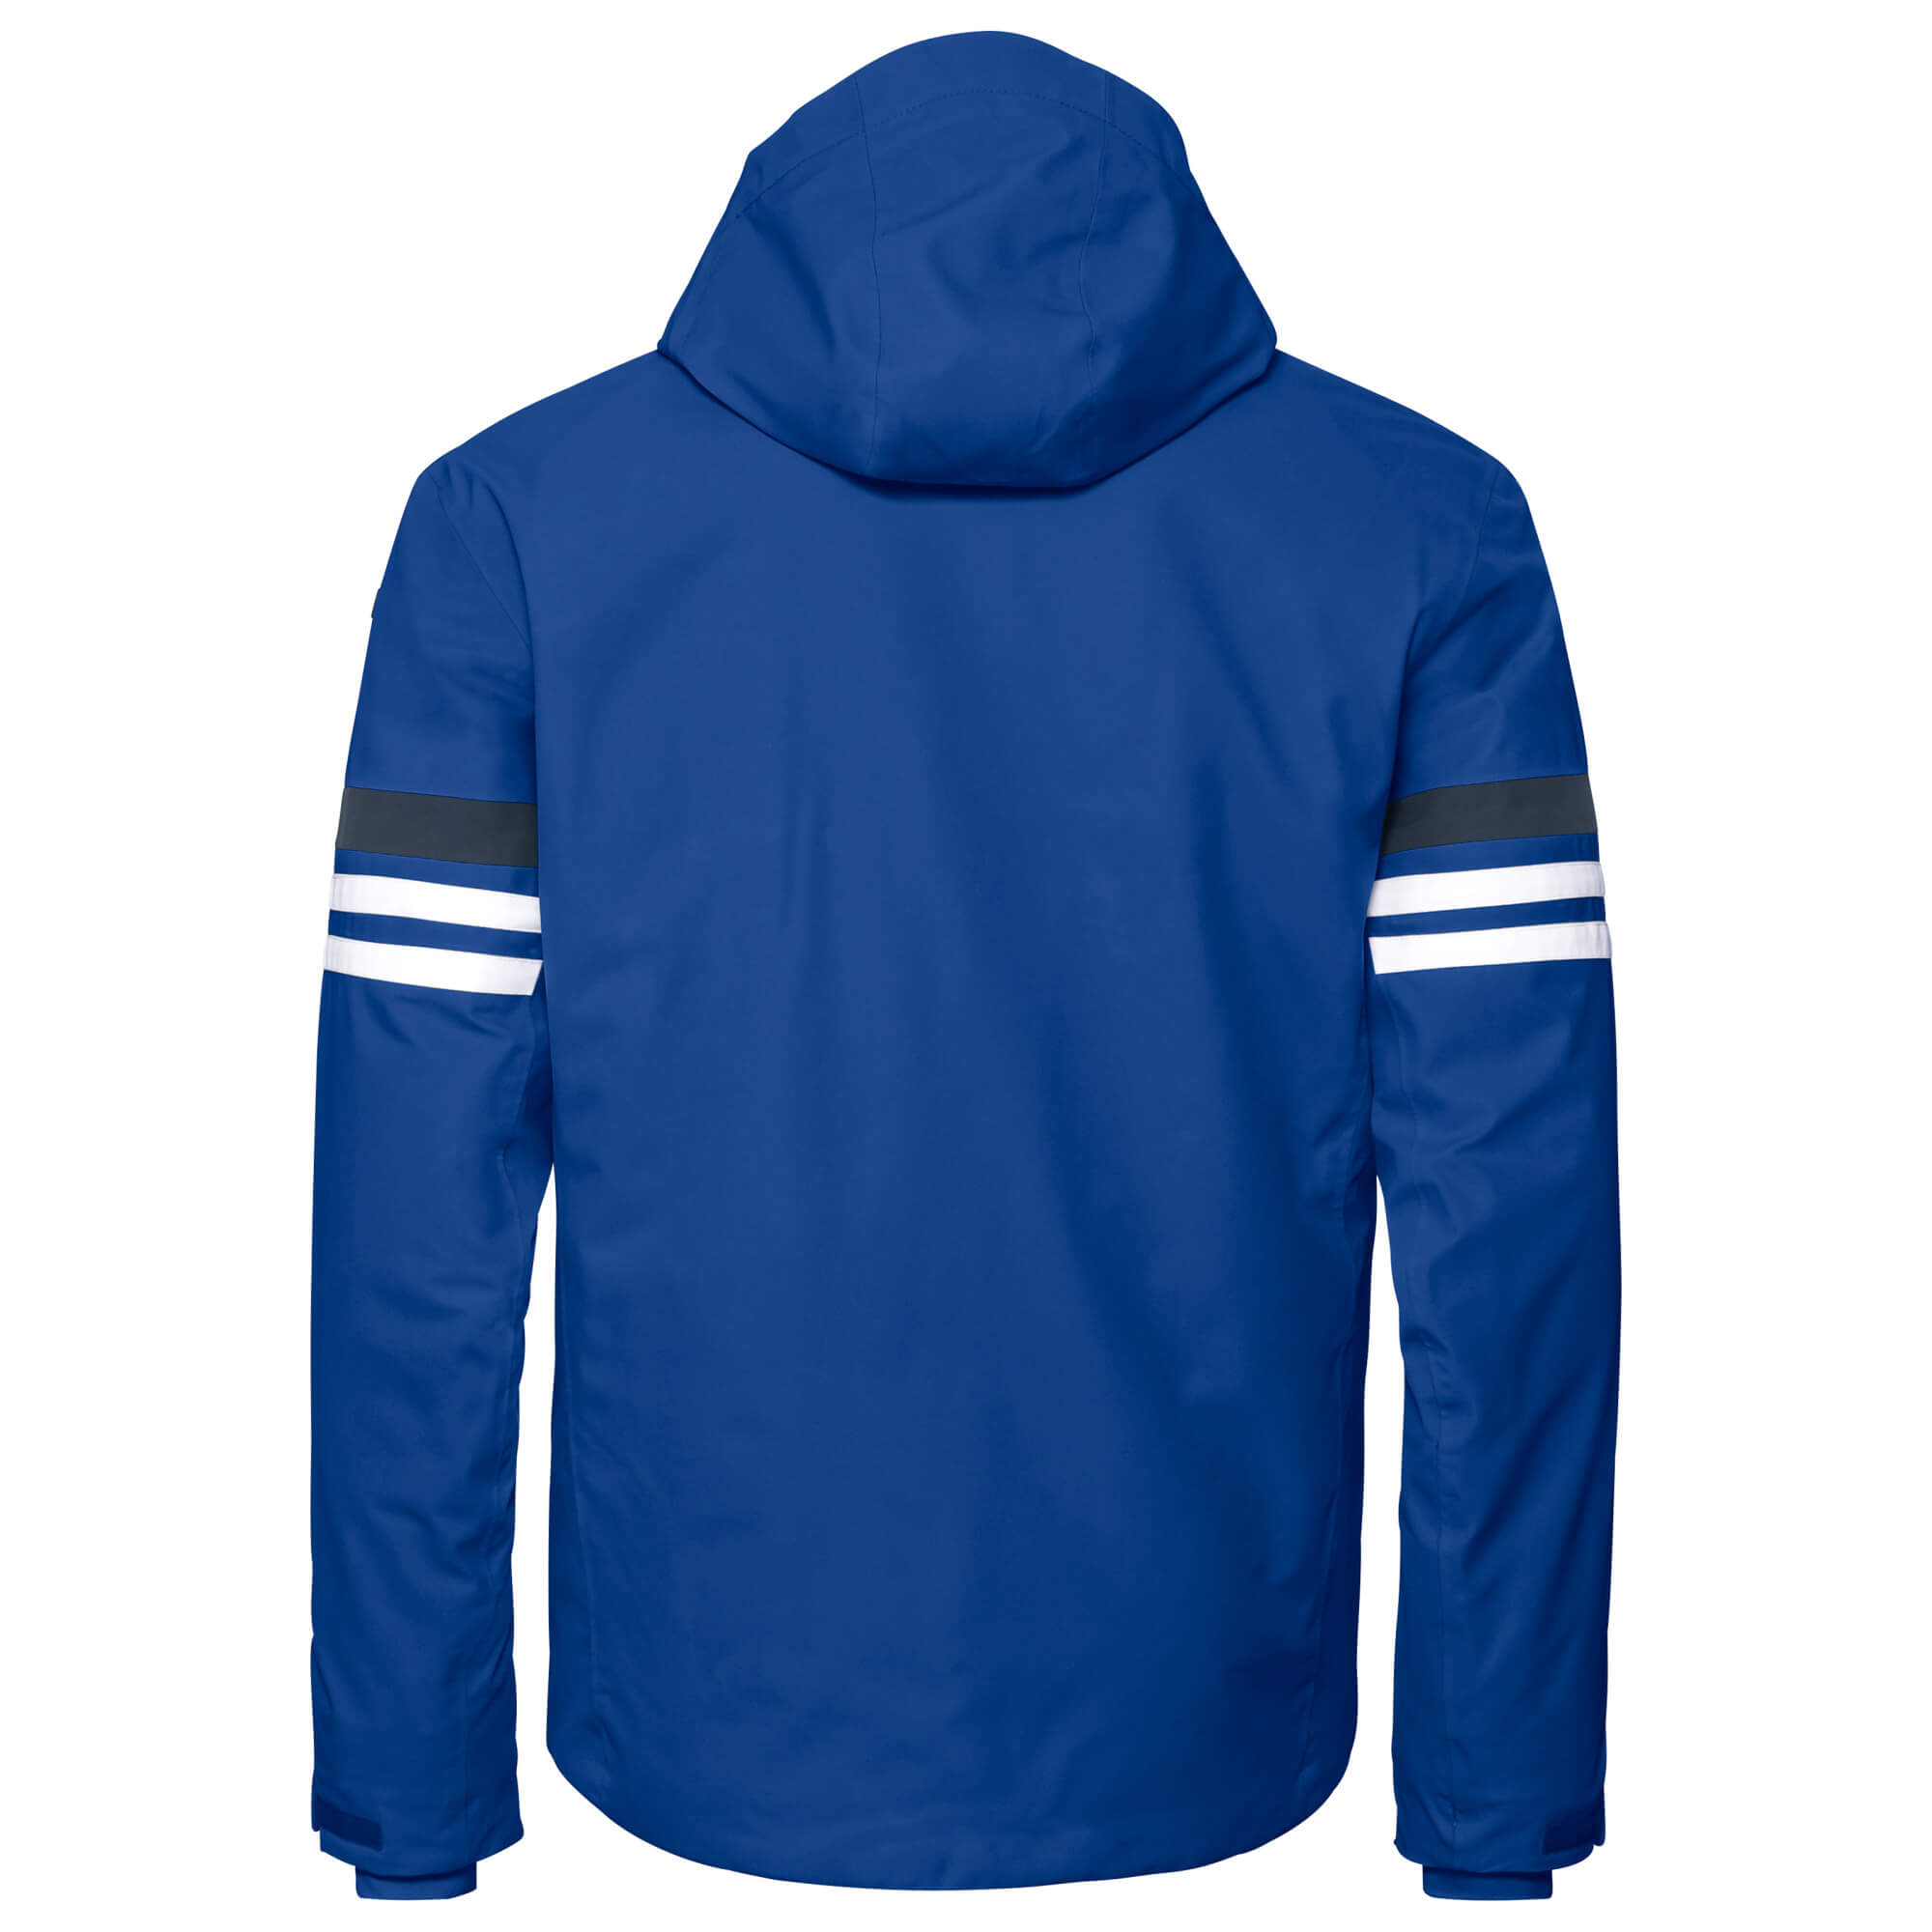 Куртка горнолыжная Head 20-21 Timberline Jacket, цвет синий, размер M 821139 - фото 2